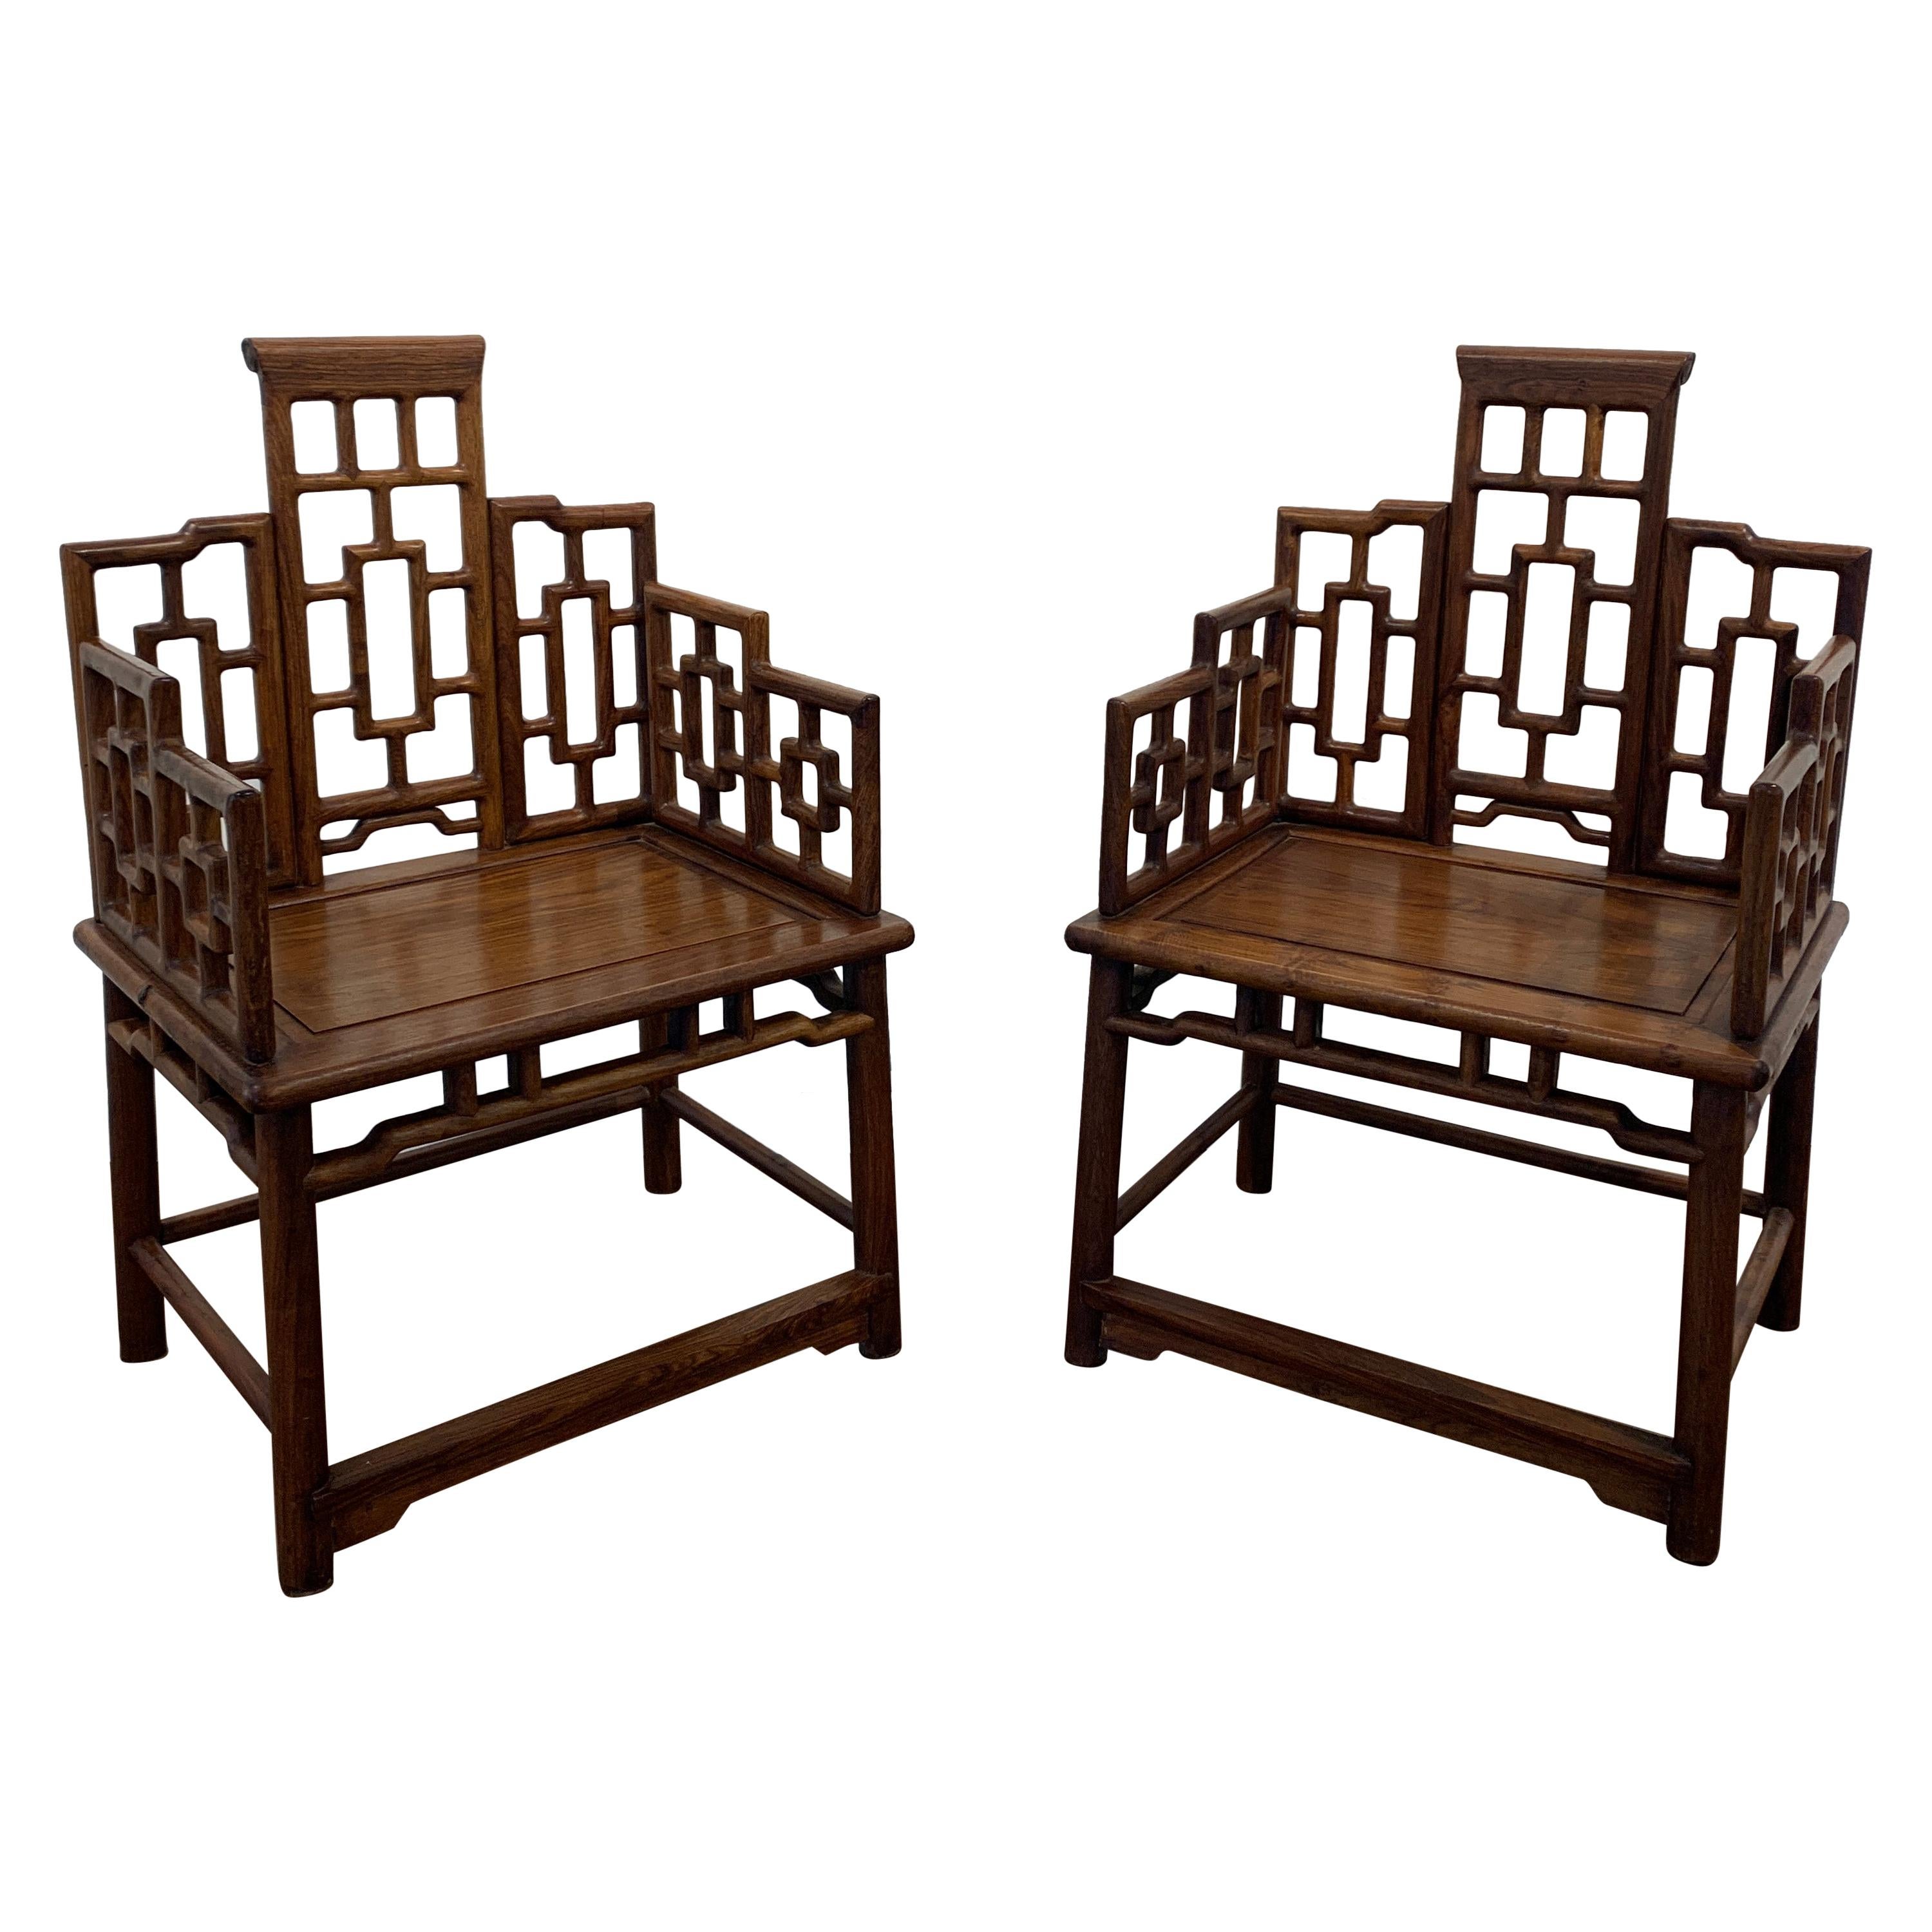 Pair of Chinese Hardwood Geometric Panel Armchairs, Mid-20th Century